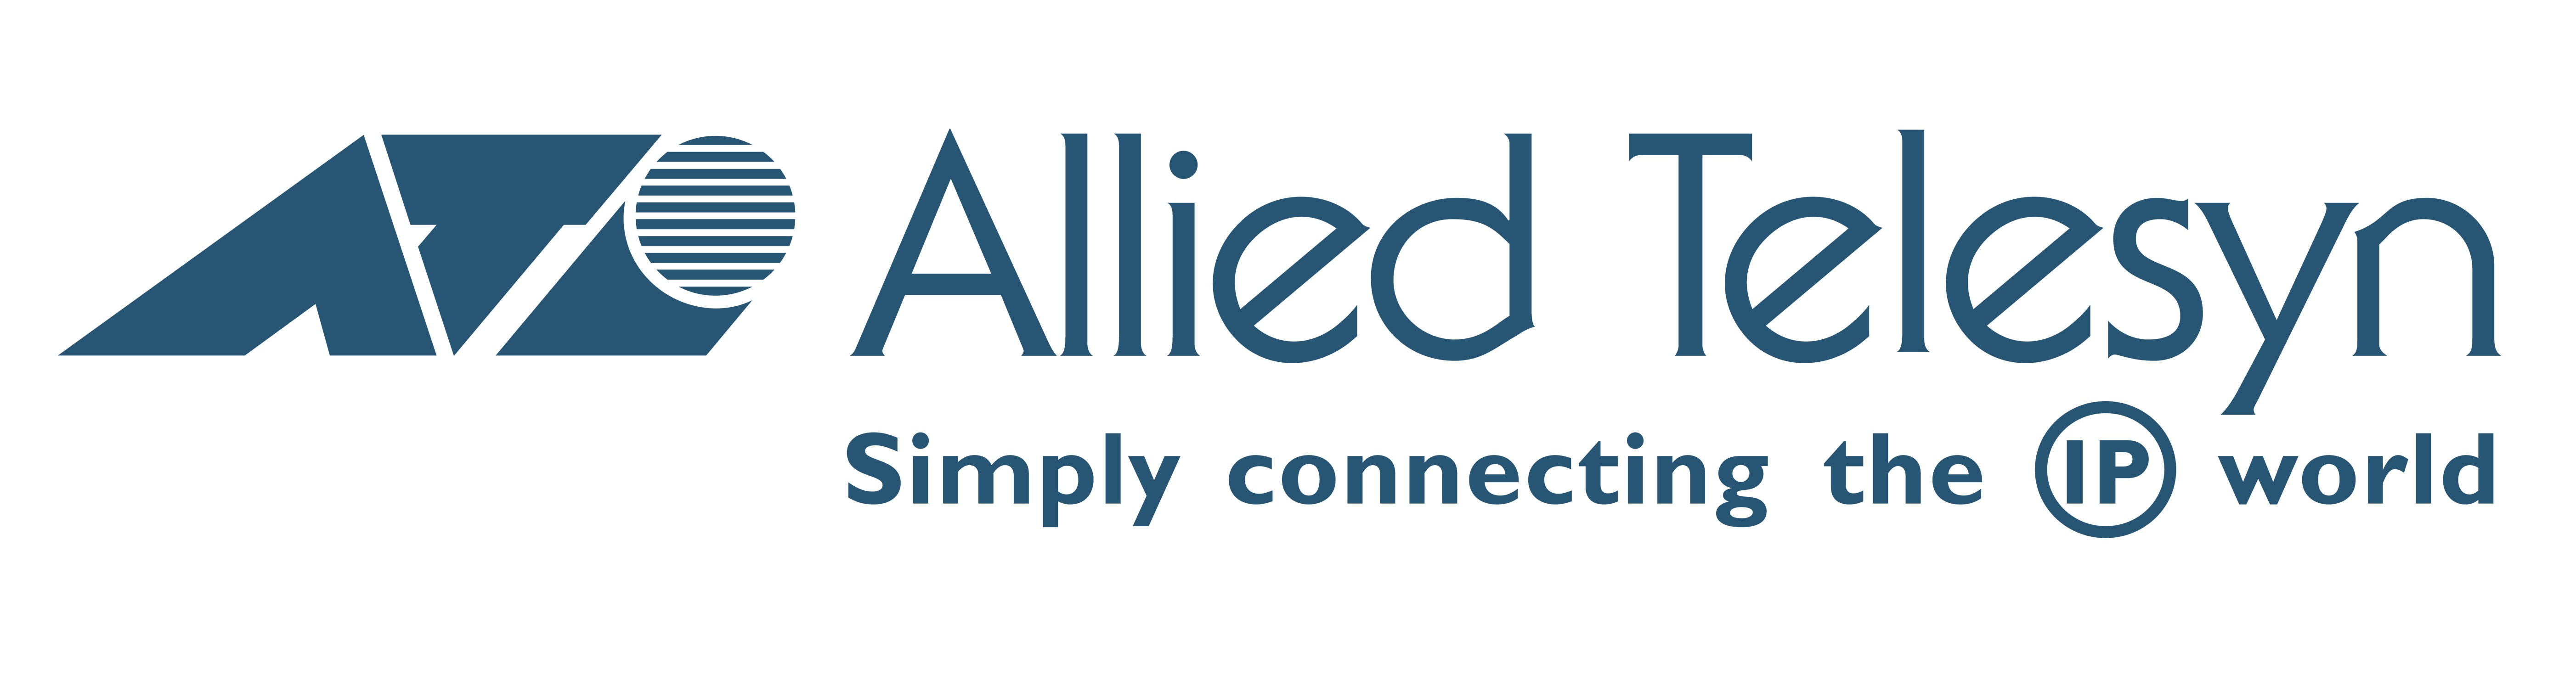 Allied Telesyn Logo photo - 1